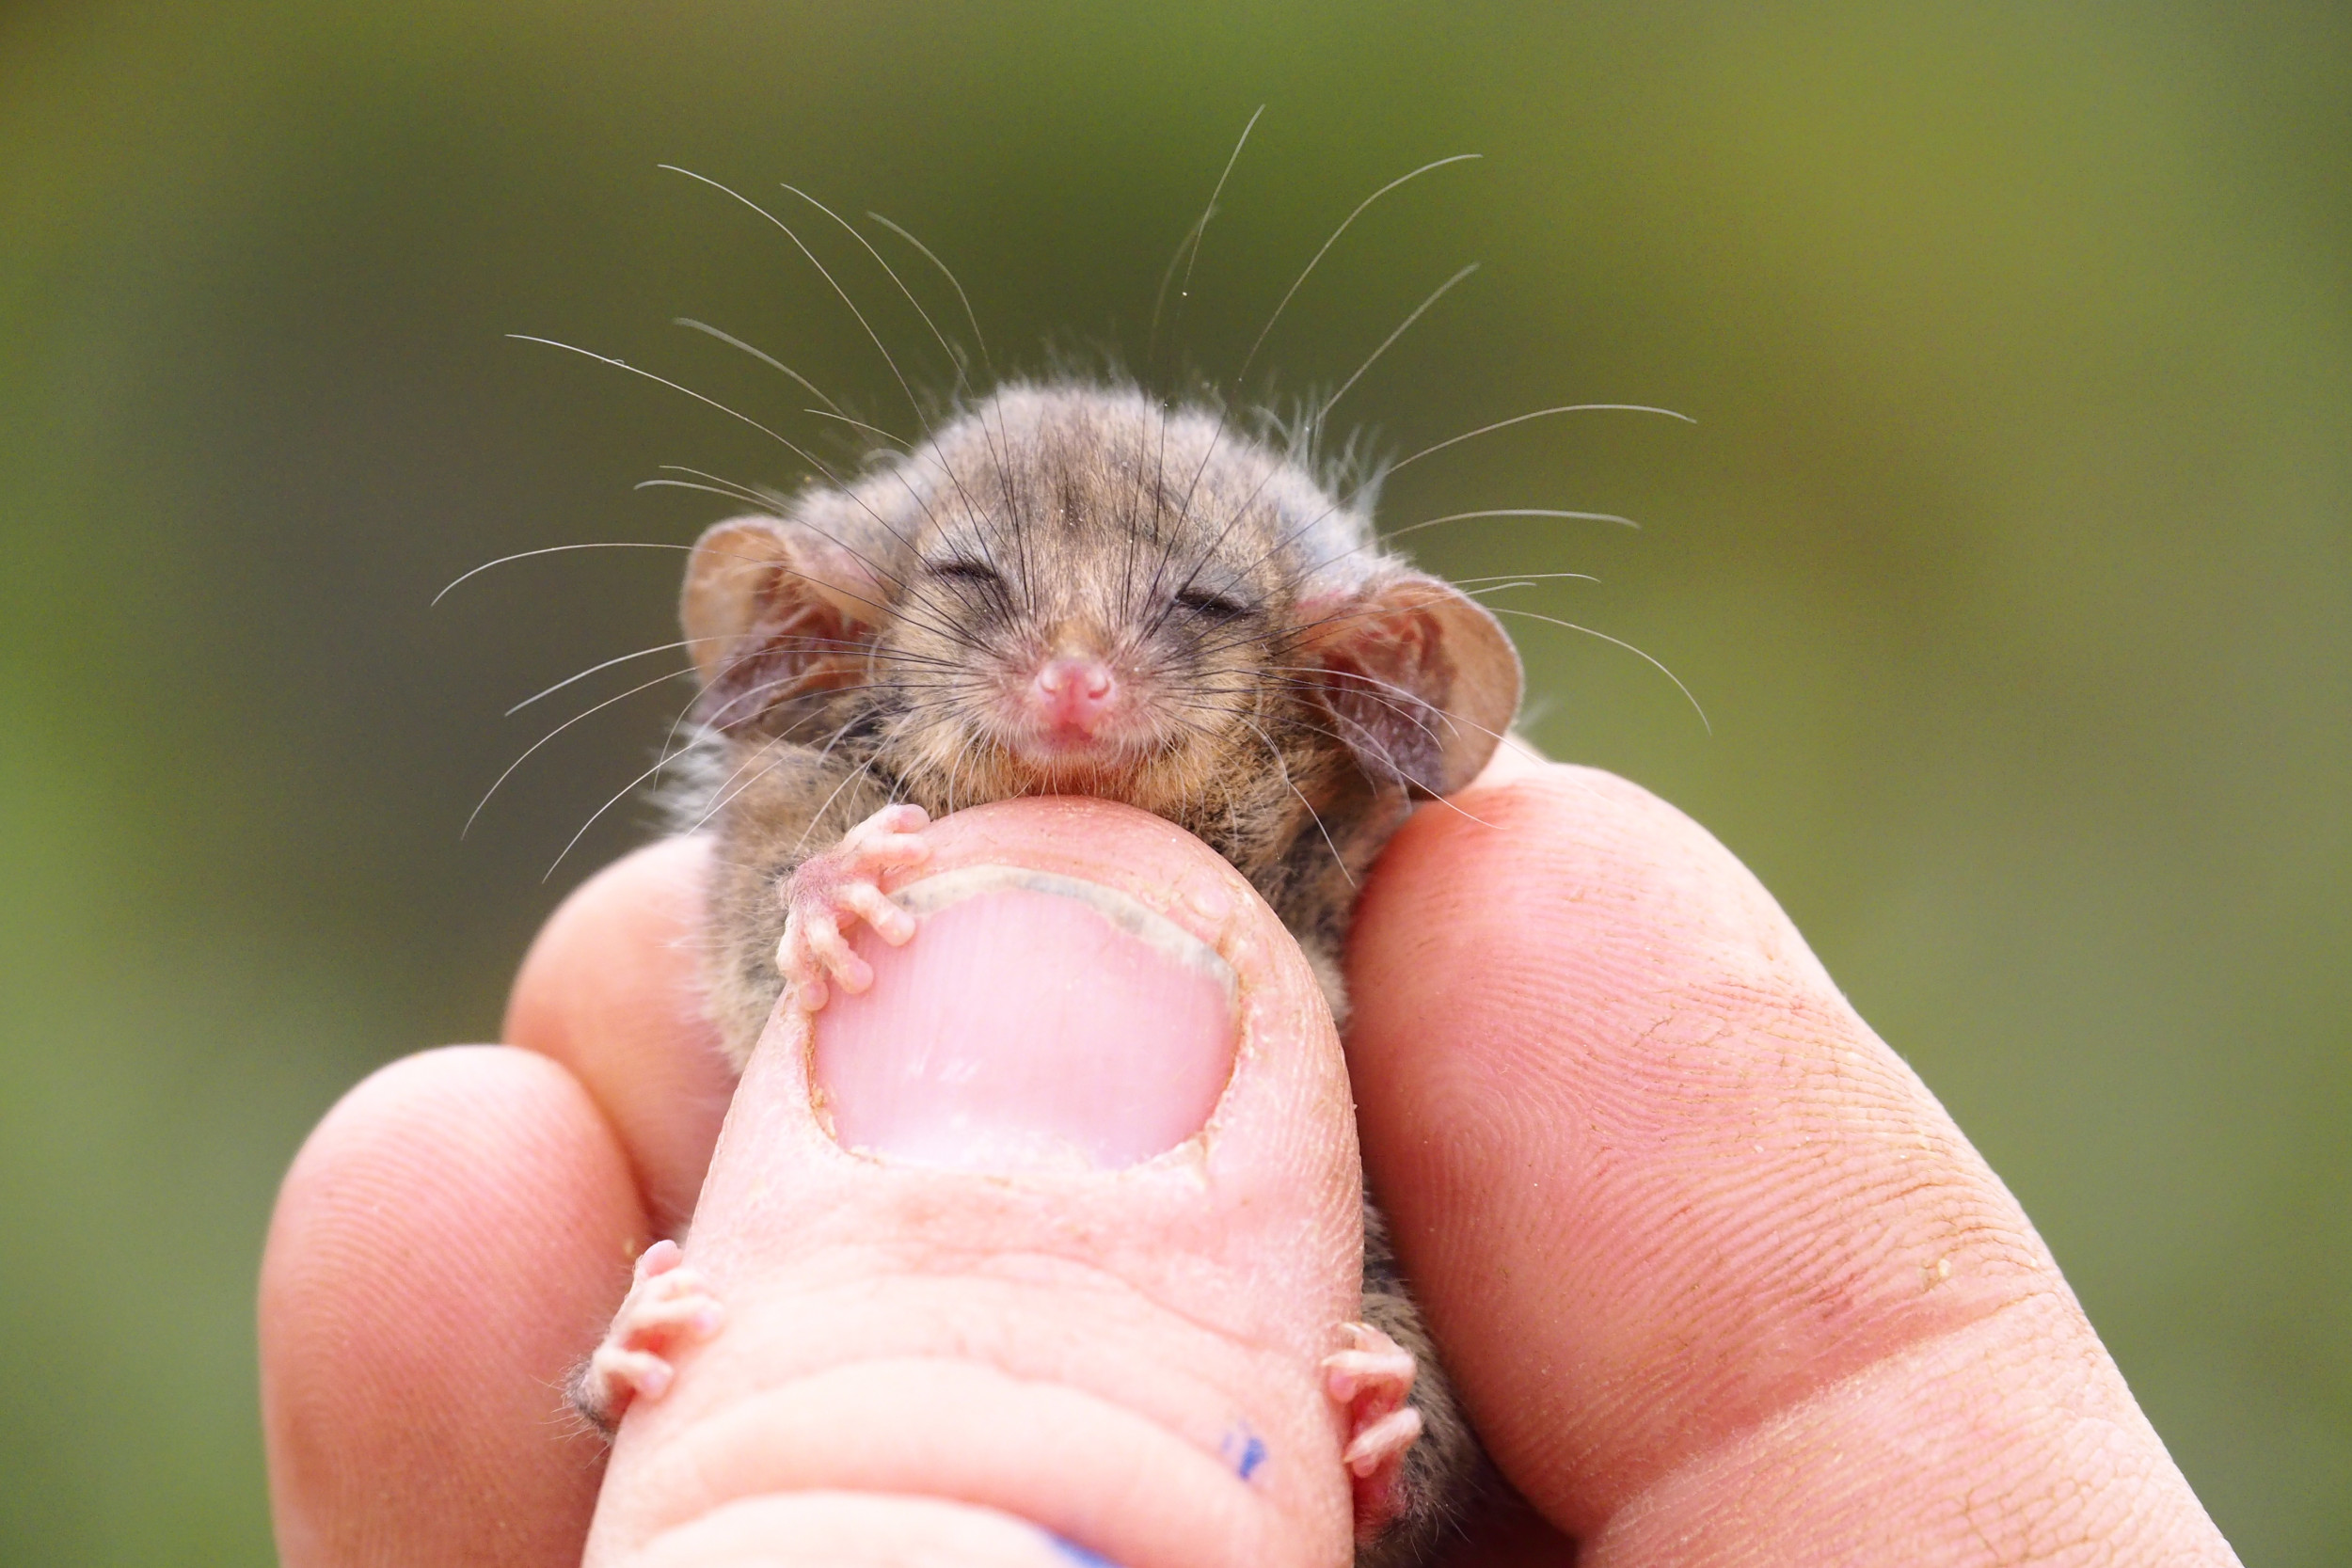 World's Smallest Possum Found, A Sign of Life on Kangaroo Island  Post-Bushfires